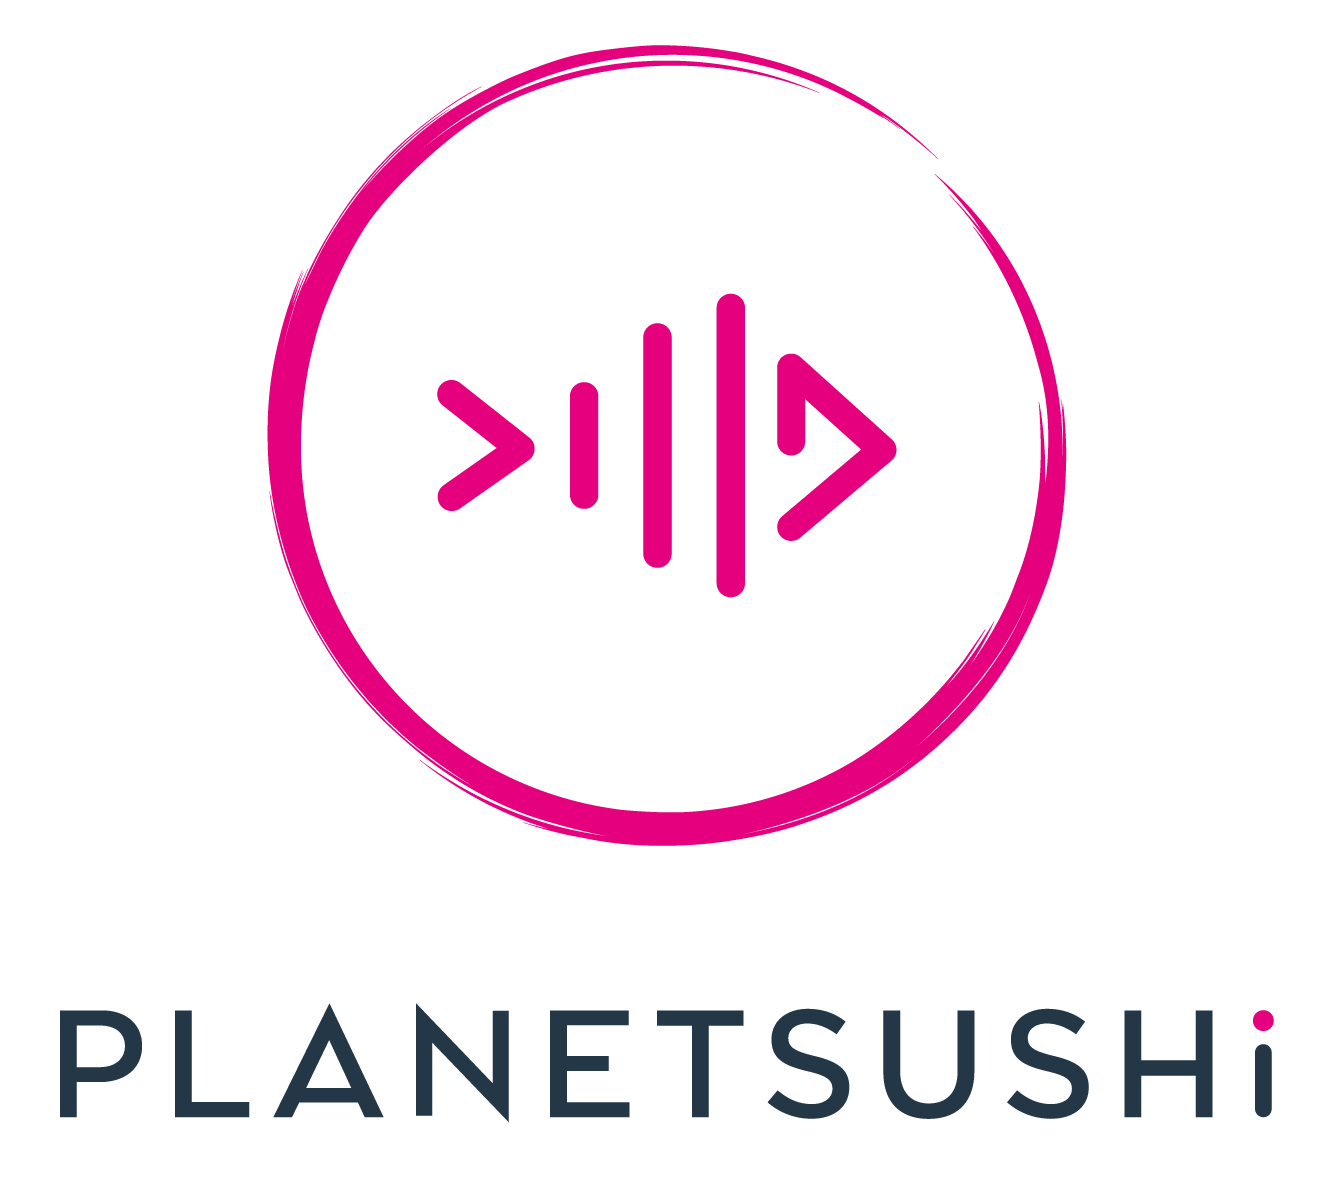 Planet Sushi logo